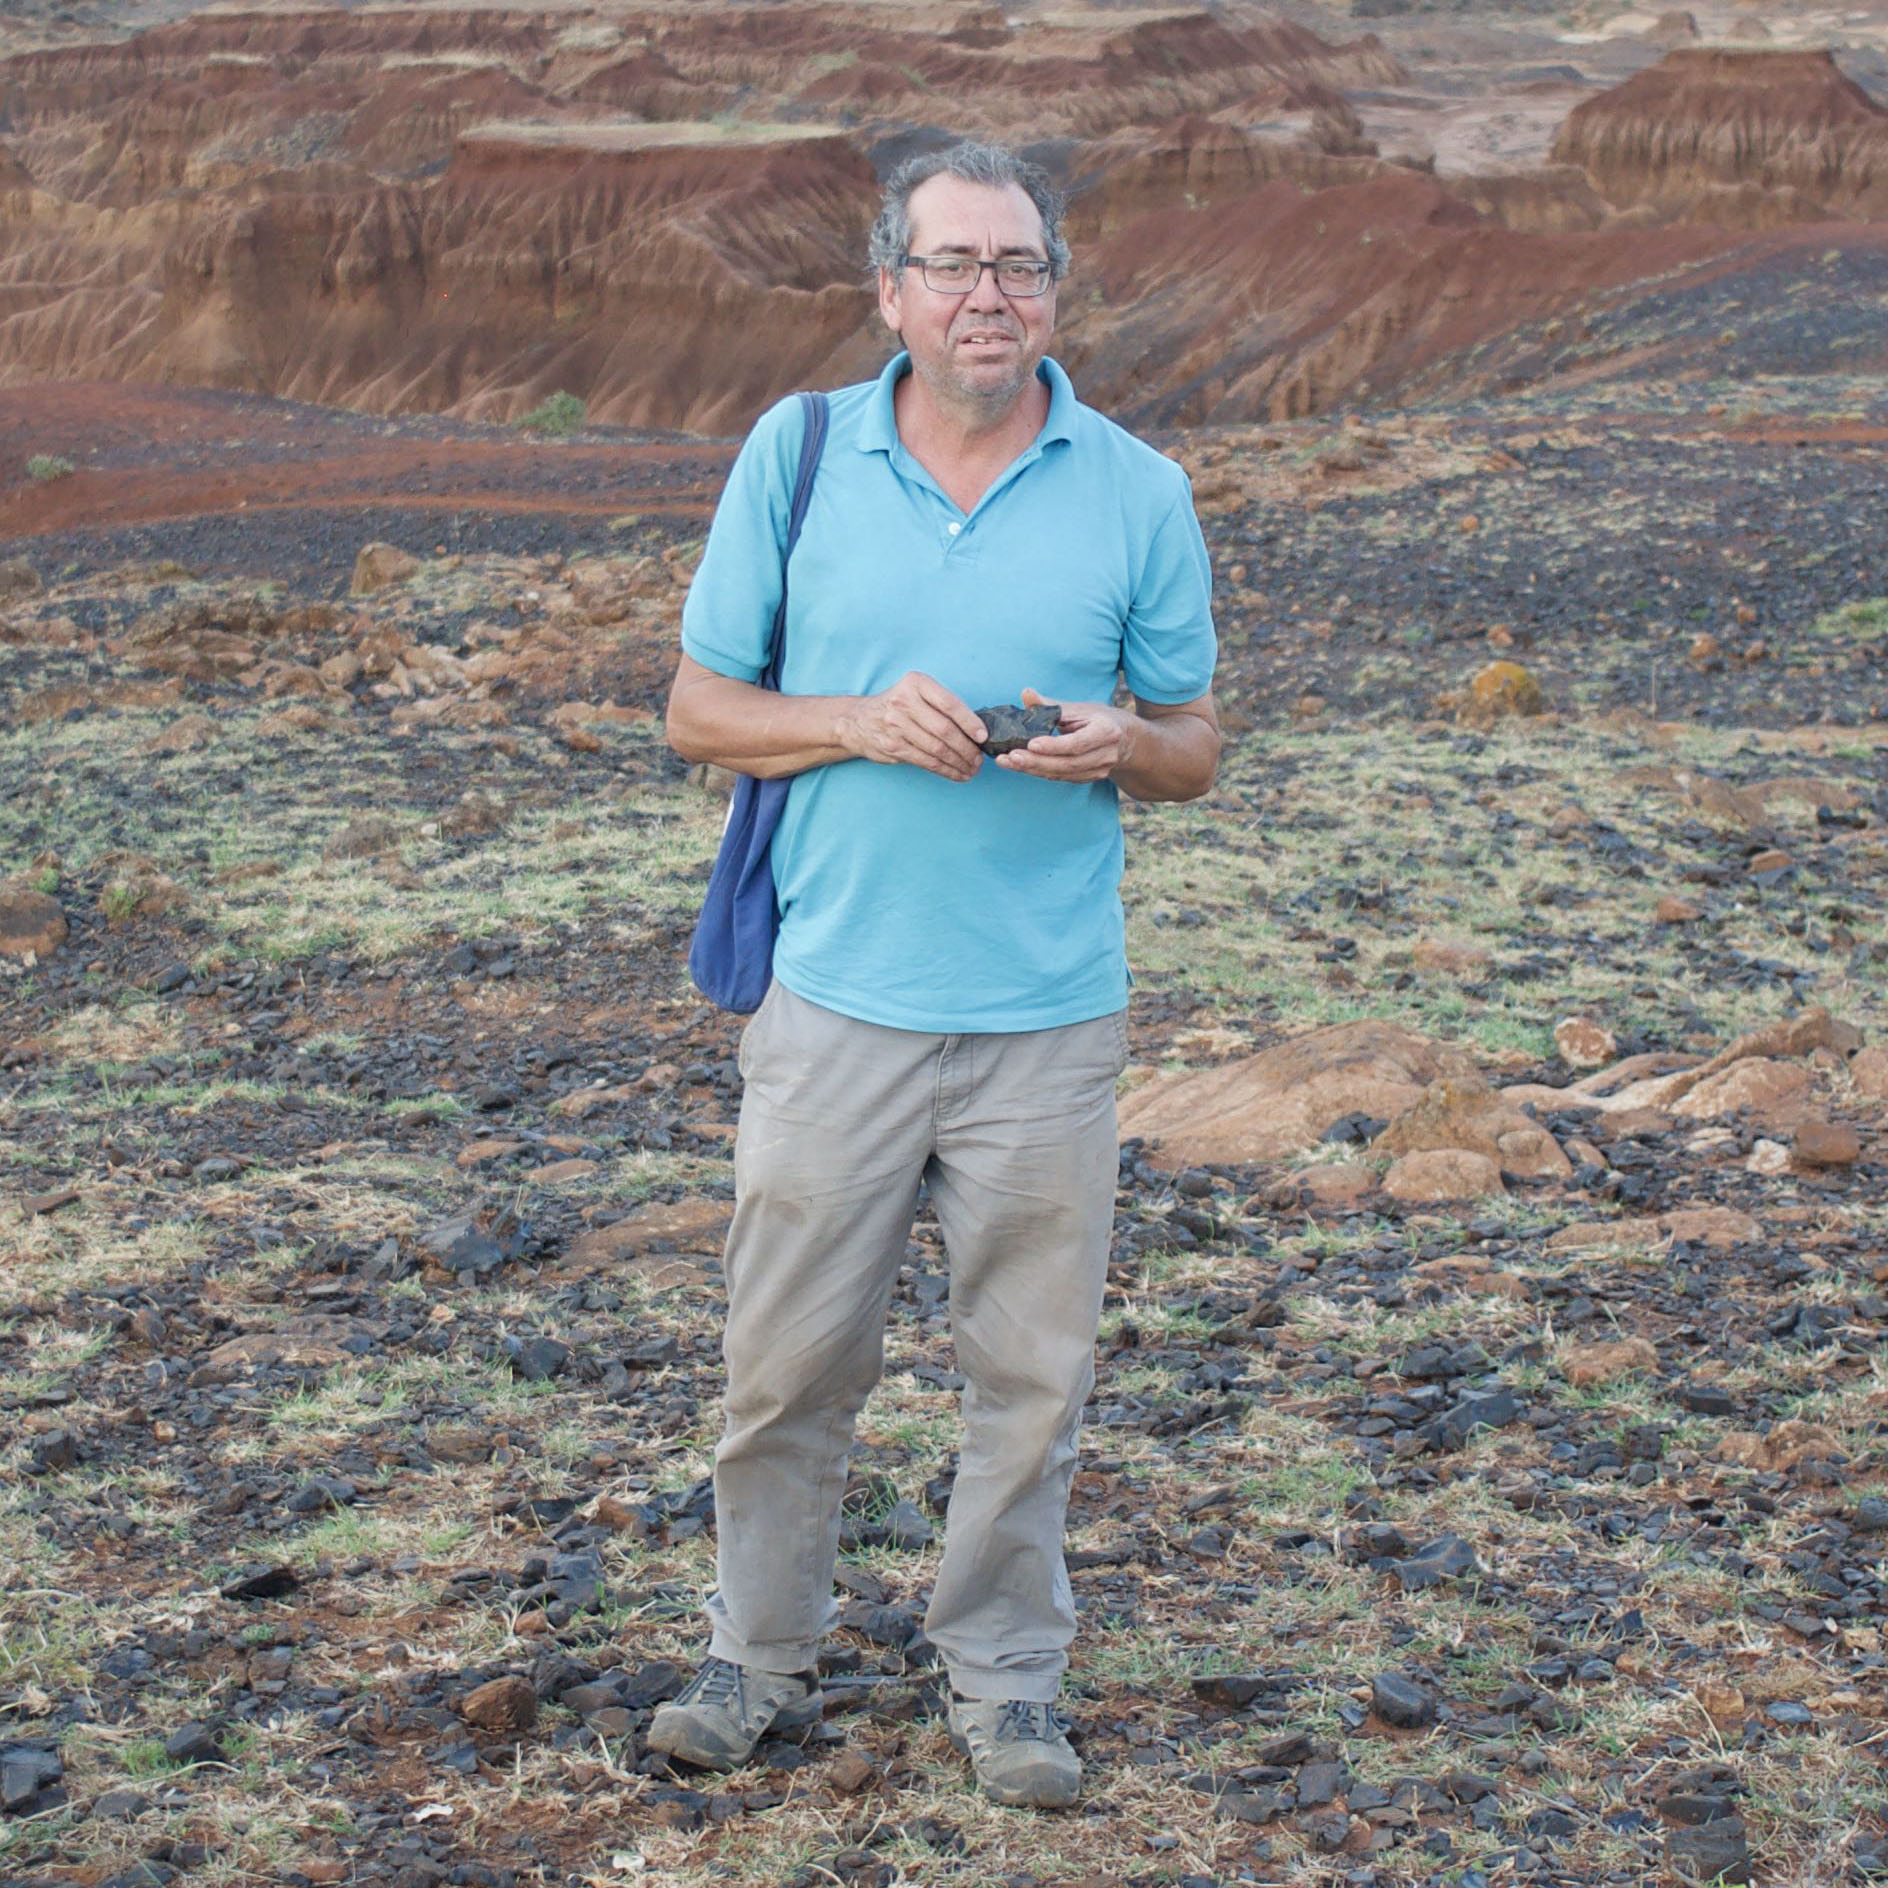 Augusto Oyuela-Caycedo standing on rocky terrain near some mountains